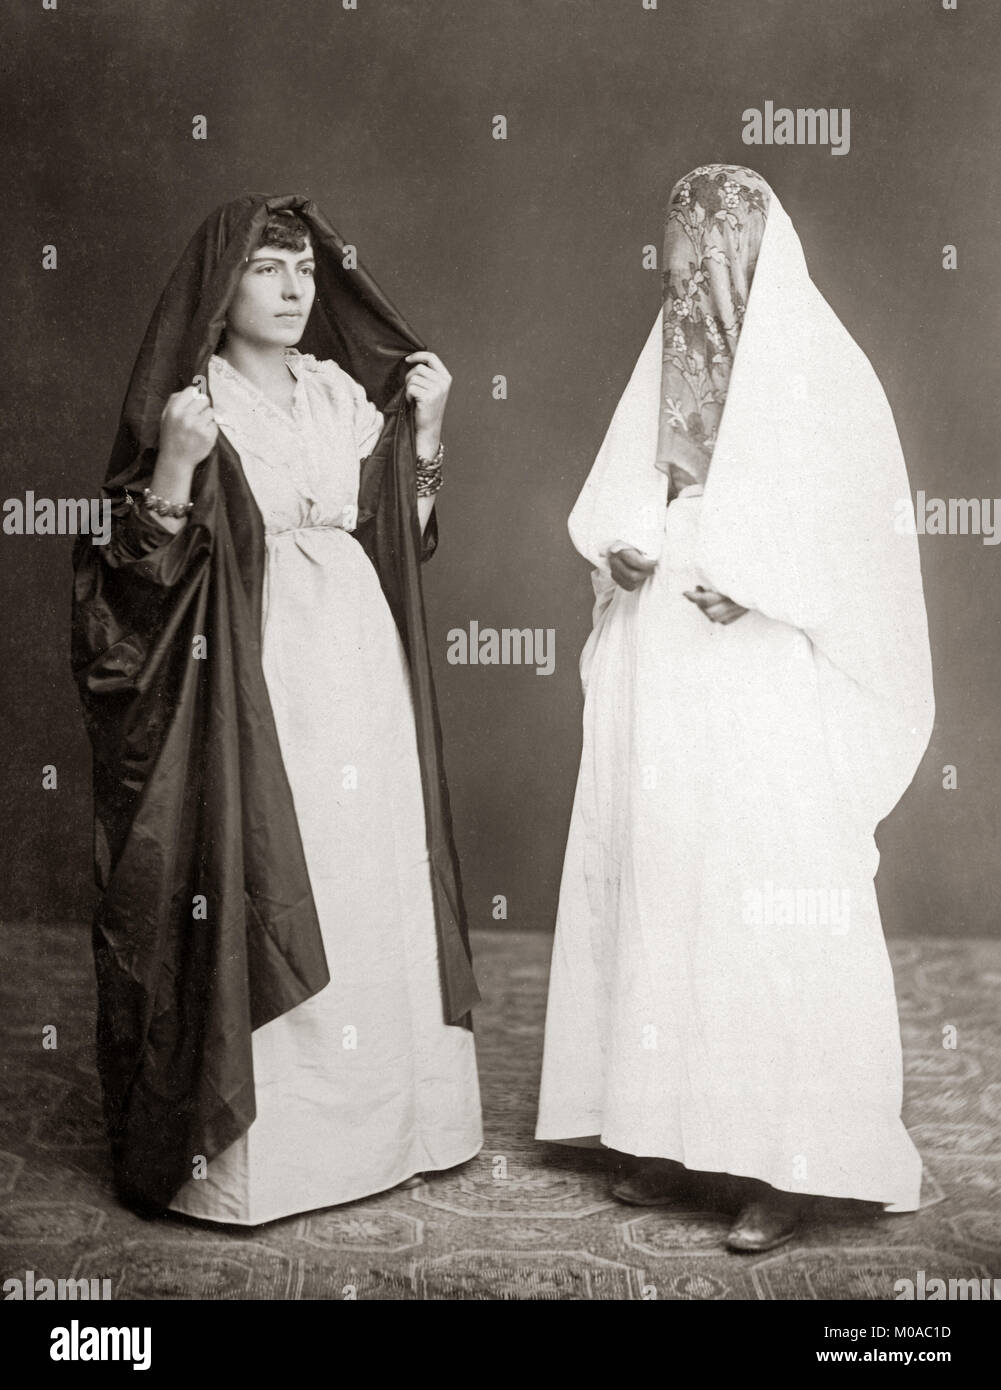 Jewish women in outdoor clothing, Beirut, Lebanon c.1880's Stock Photo -  Alamy